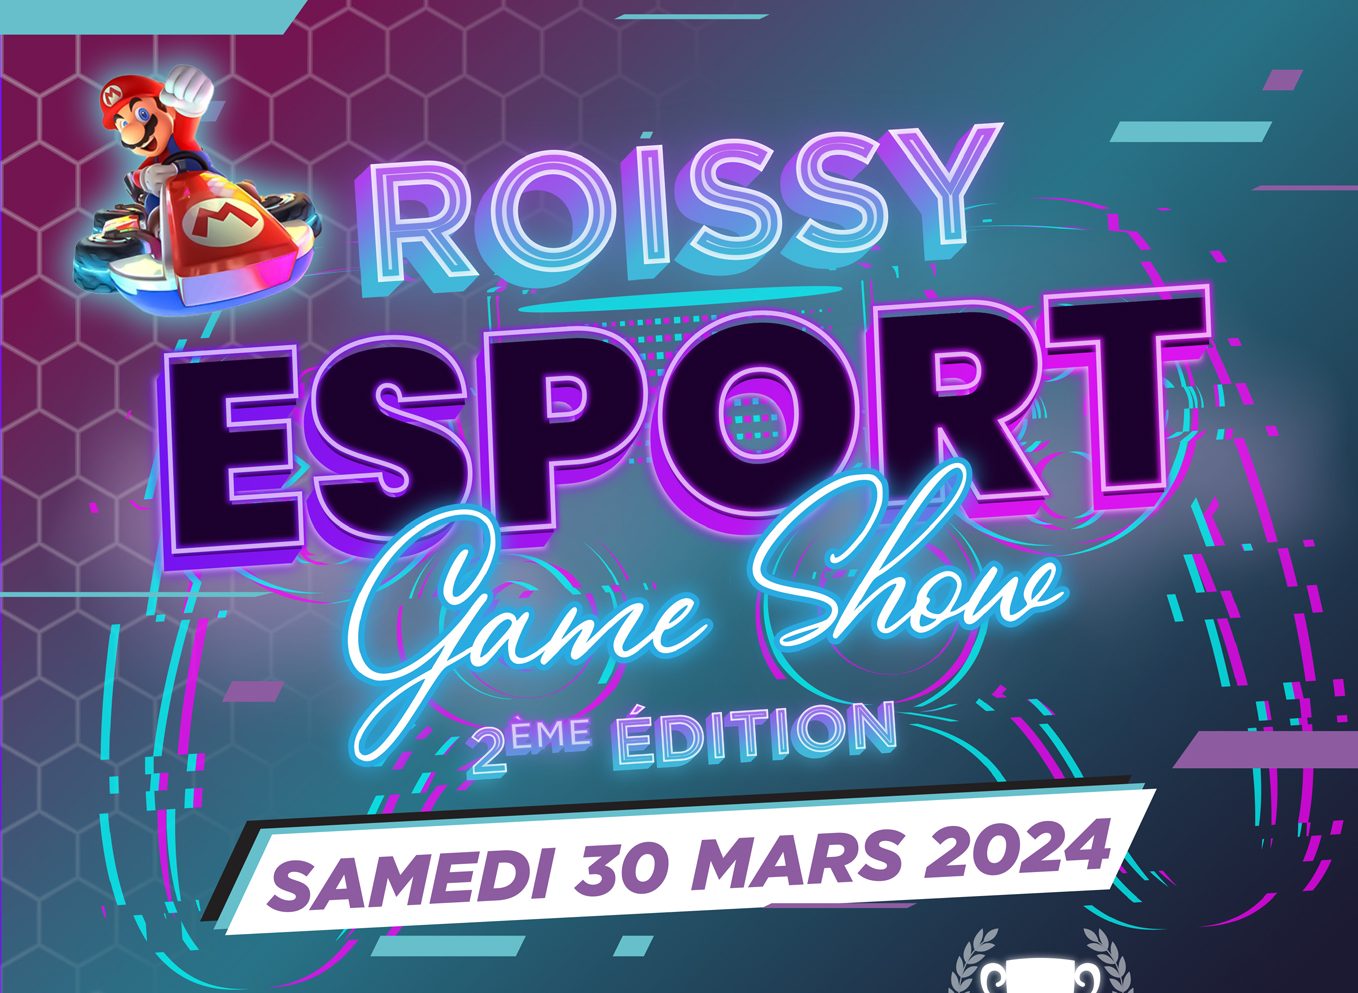 Roissy Esport Game Show revient le 30 mars !